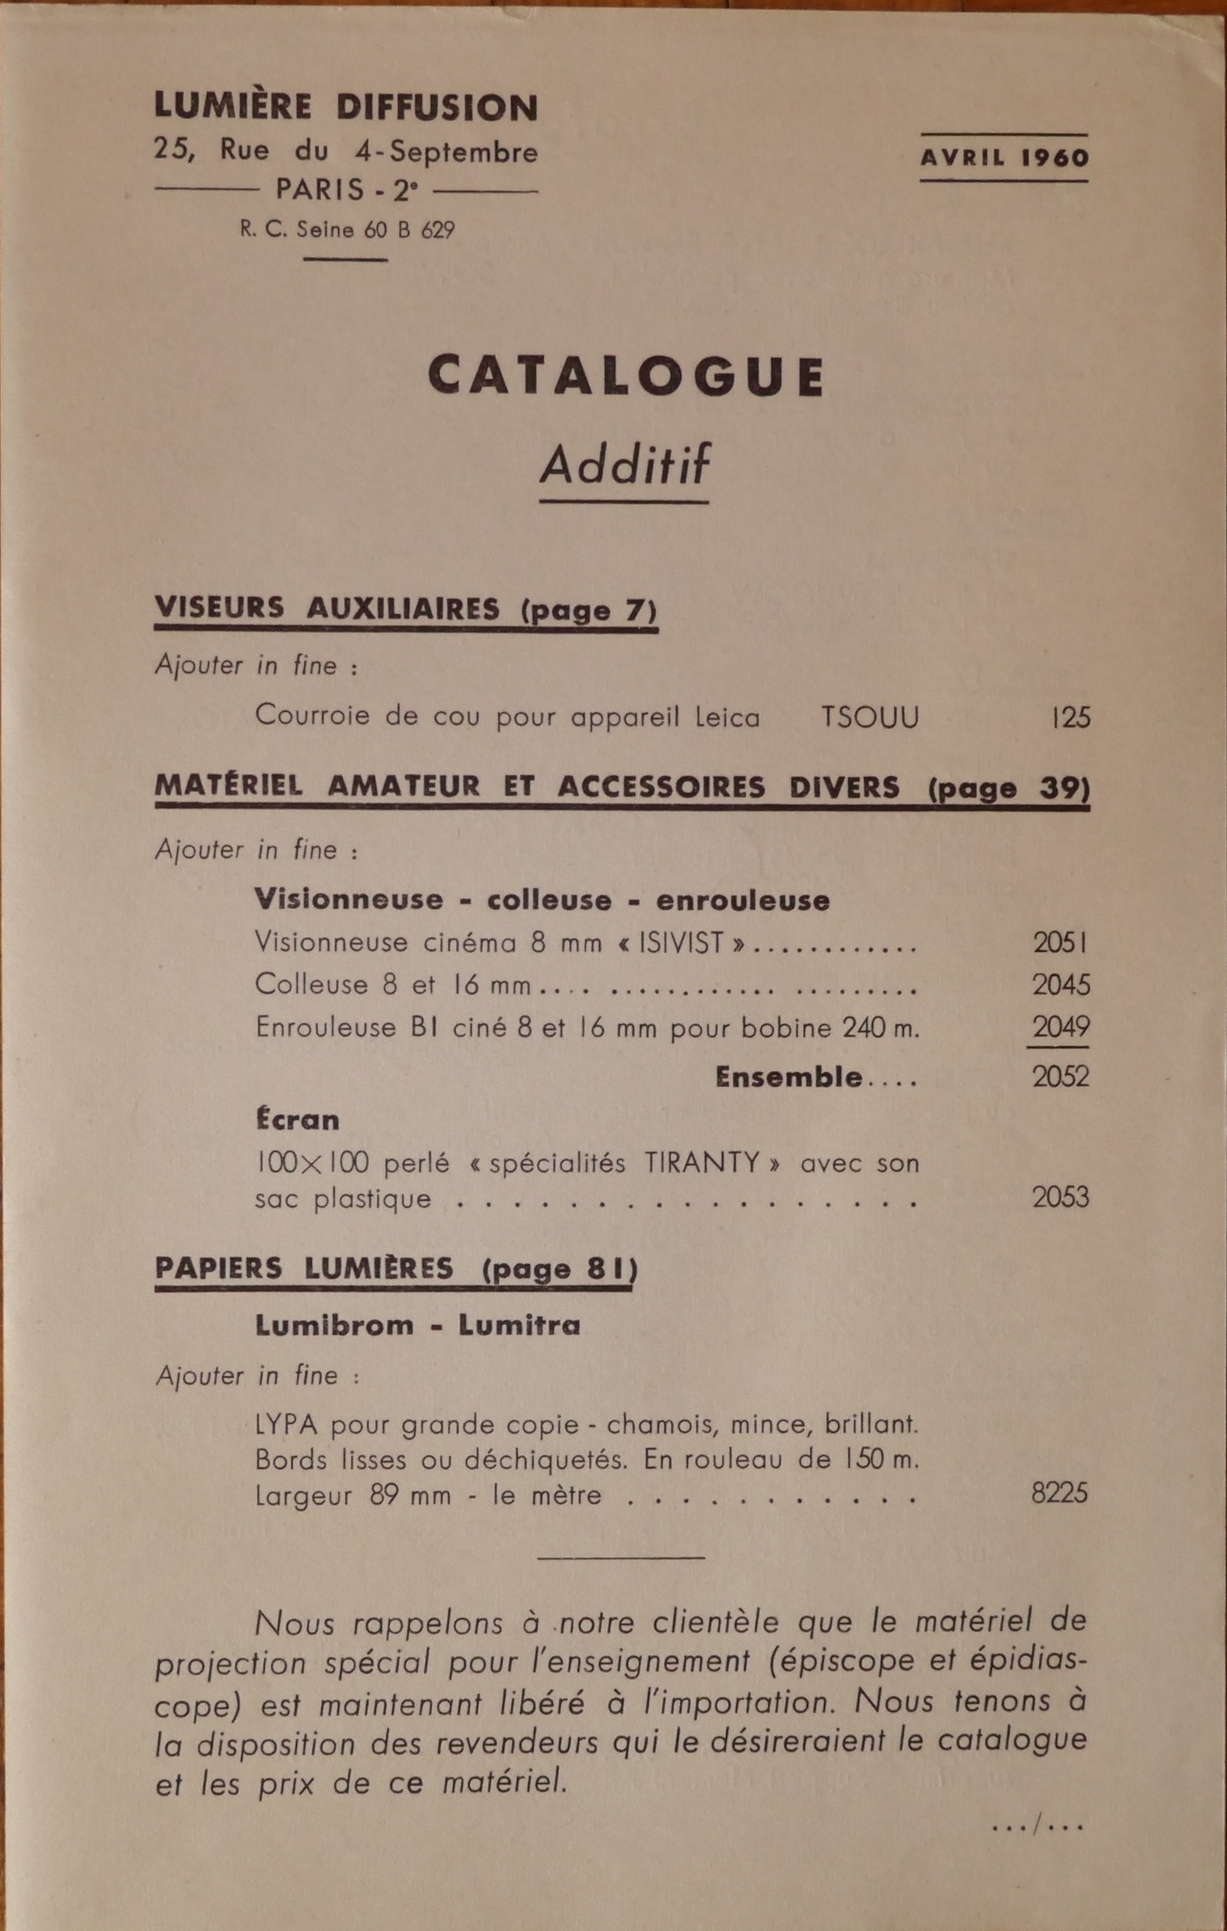 Catalogue additif - avril 1960